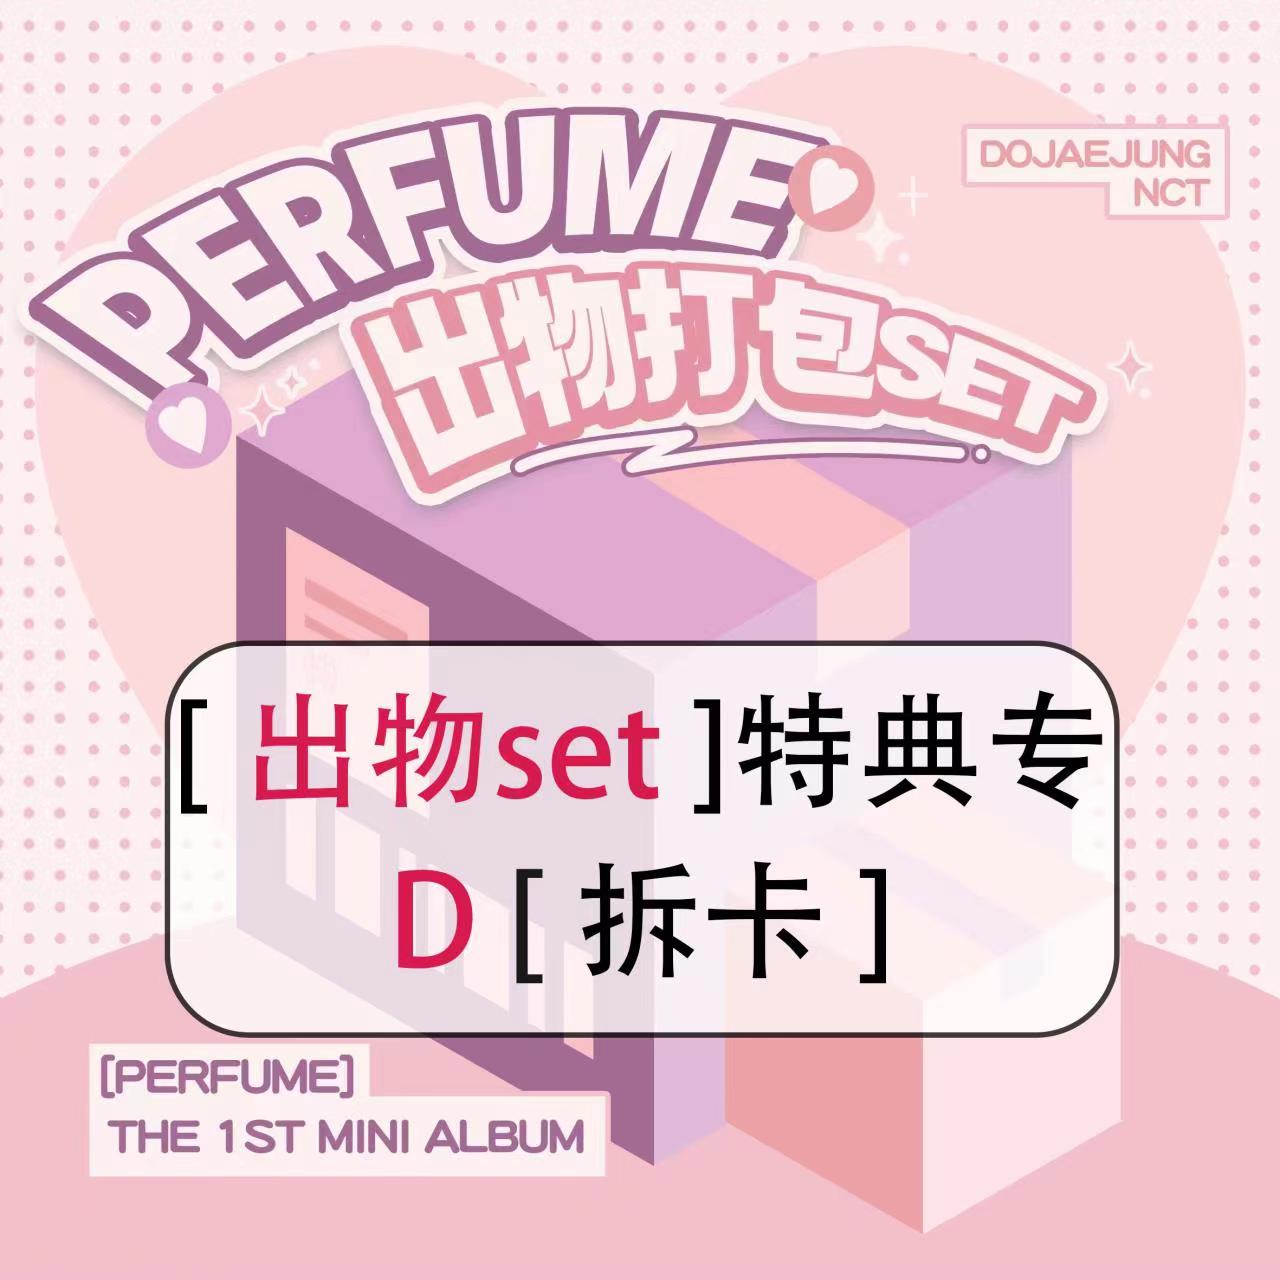 [拆卡专 出物打包set] NCT DOJAEJUNG - The 1st Mini Album [Perfume] (Digipack Ver.)_道英吧_DoYoungBar